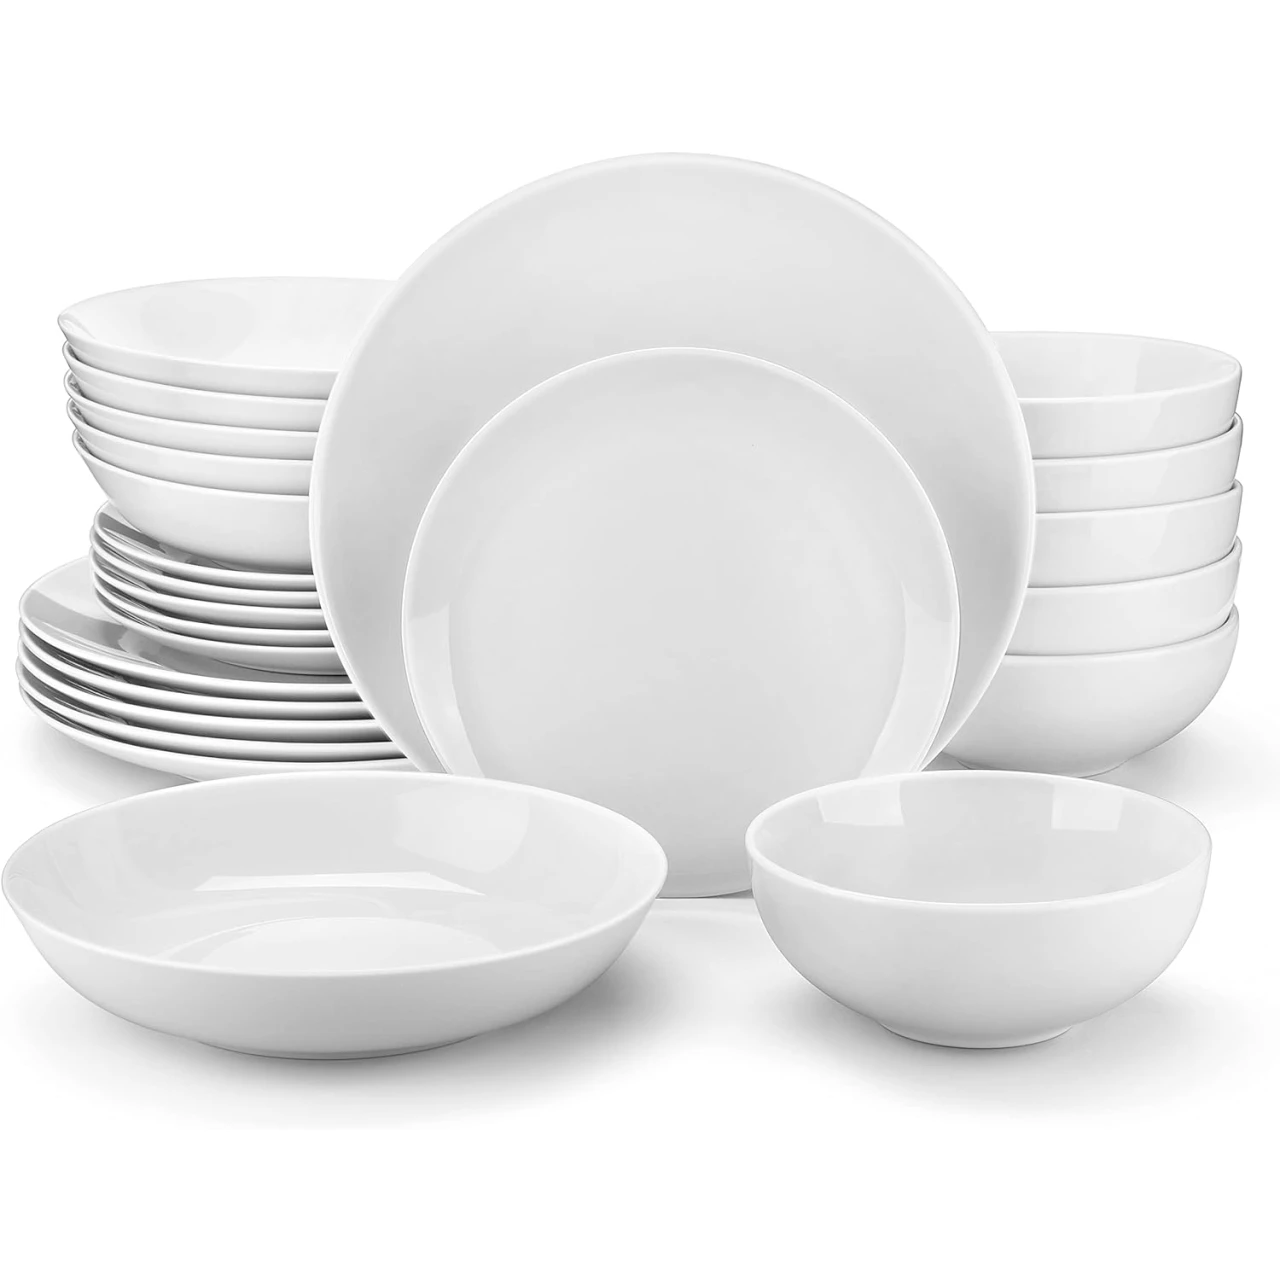 MALACASA 24-Piece Gourmet Porcelain Dinnerware Sets, Modern White Round Dish Set for 6